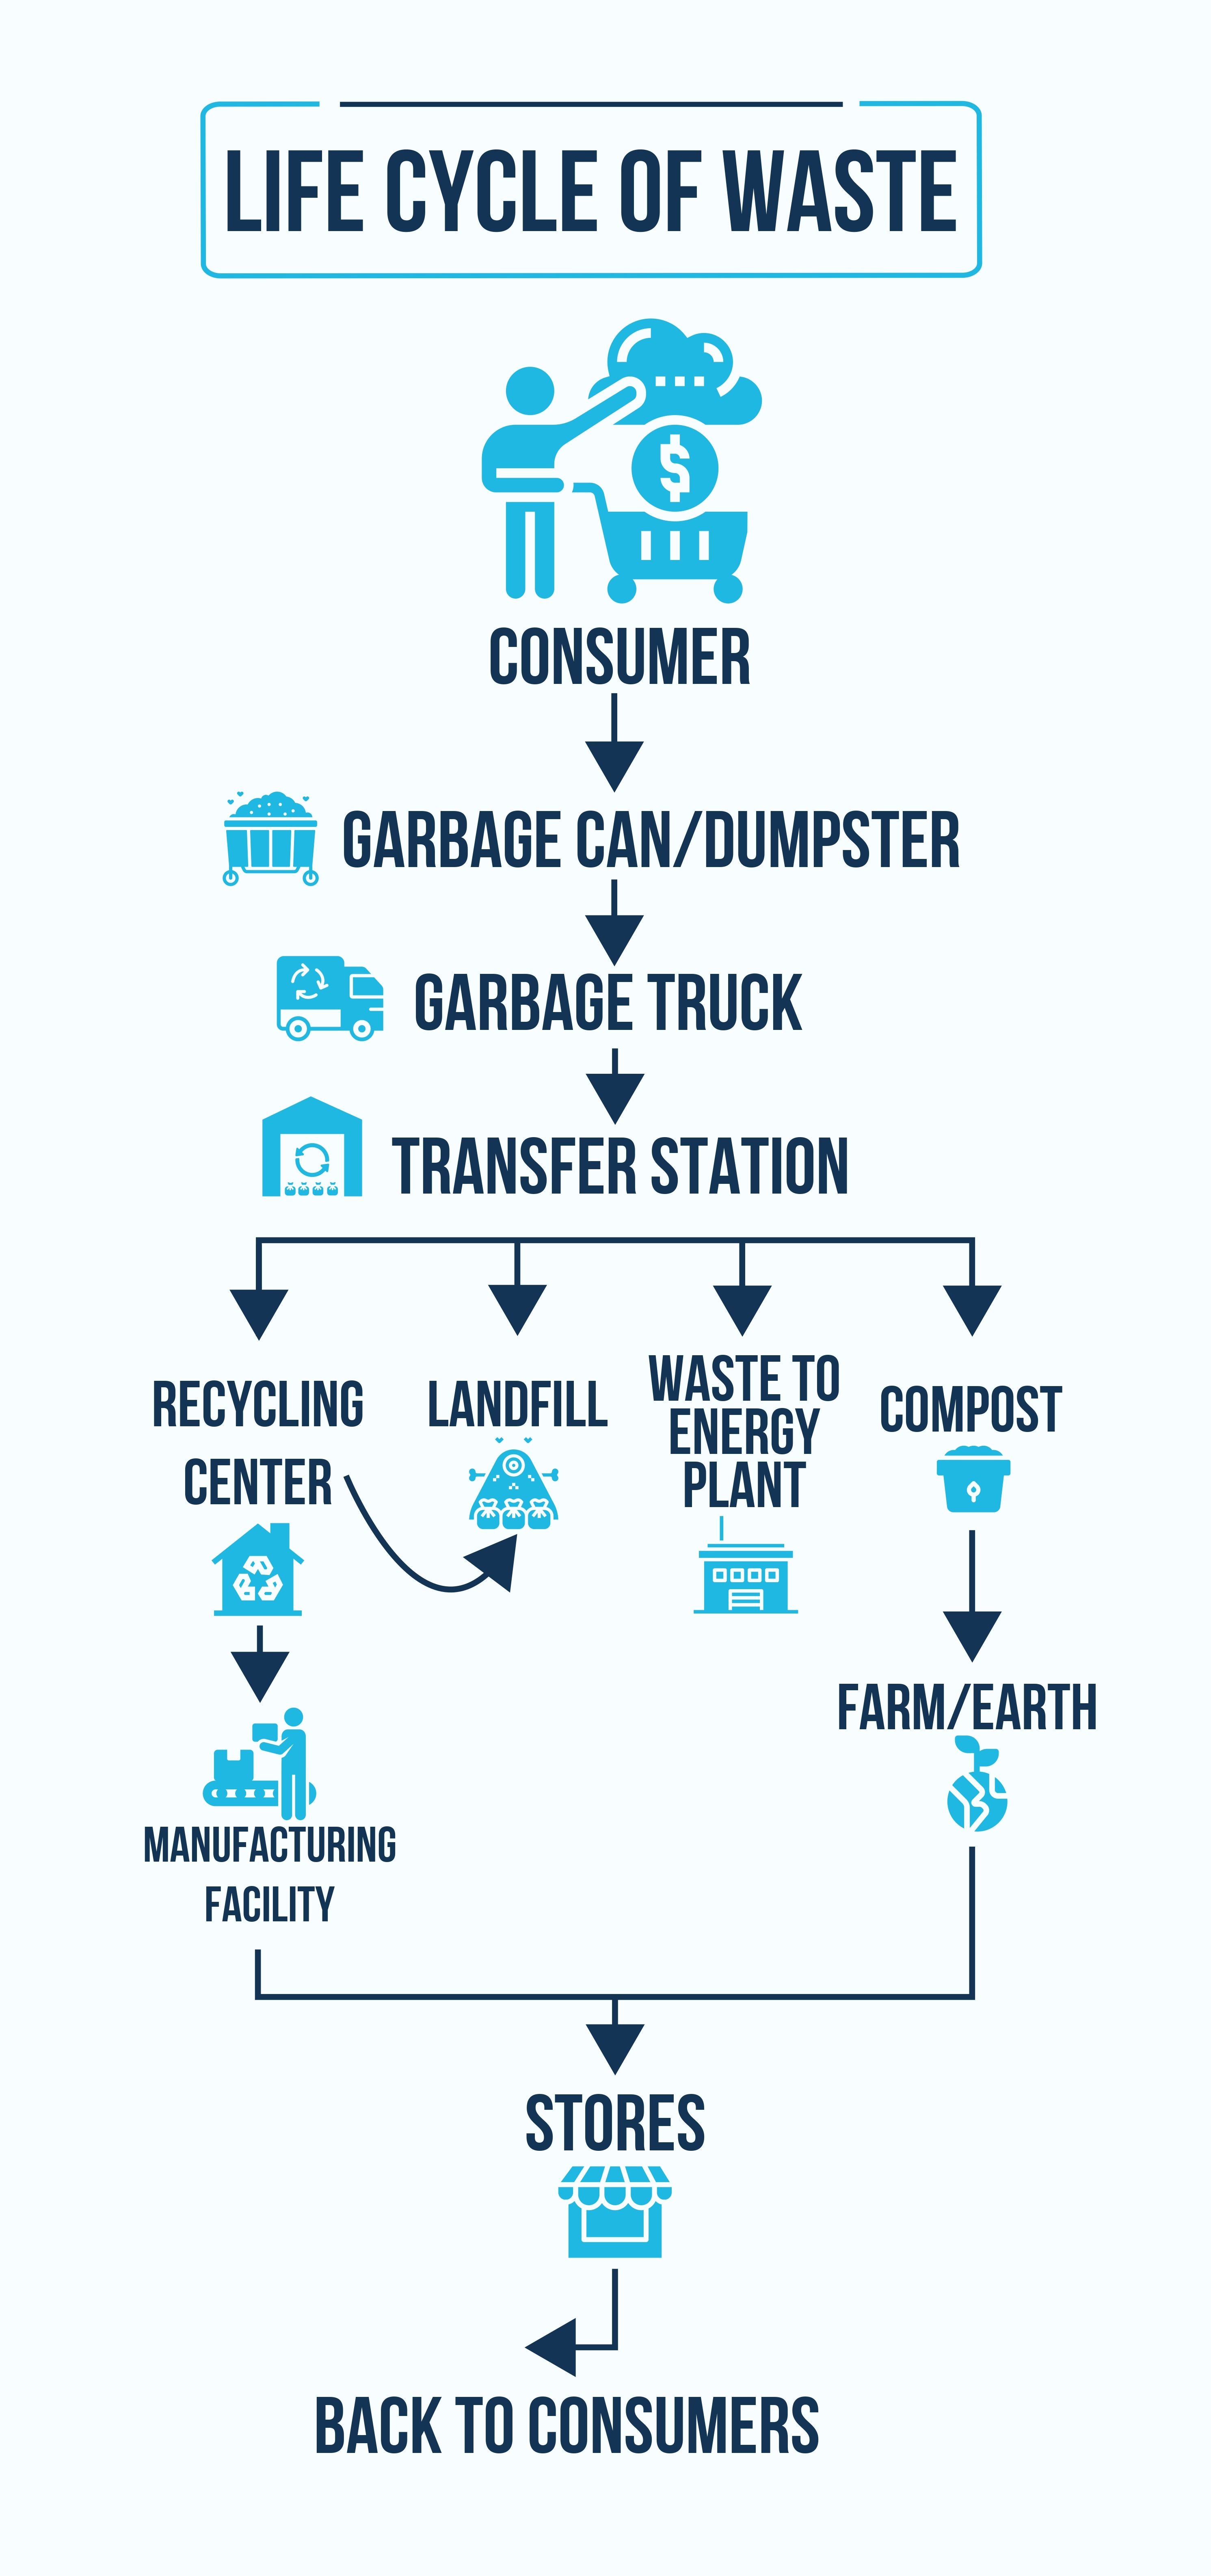 Life Cycle of Waste flowchart